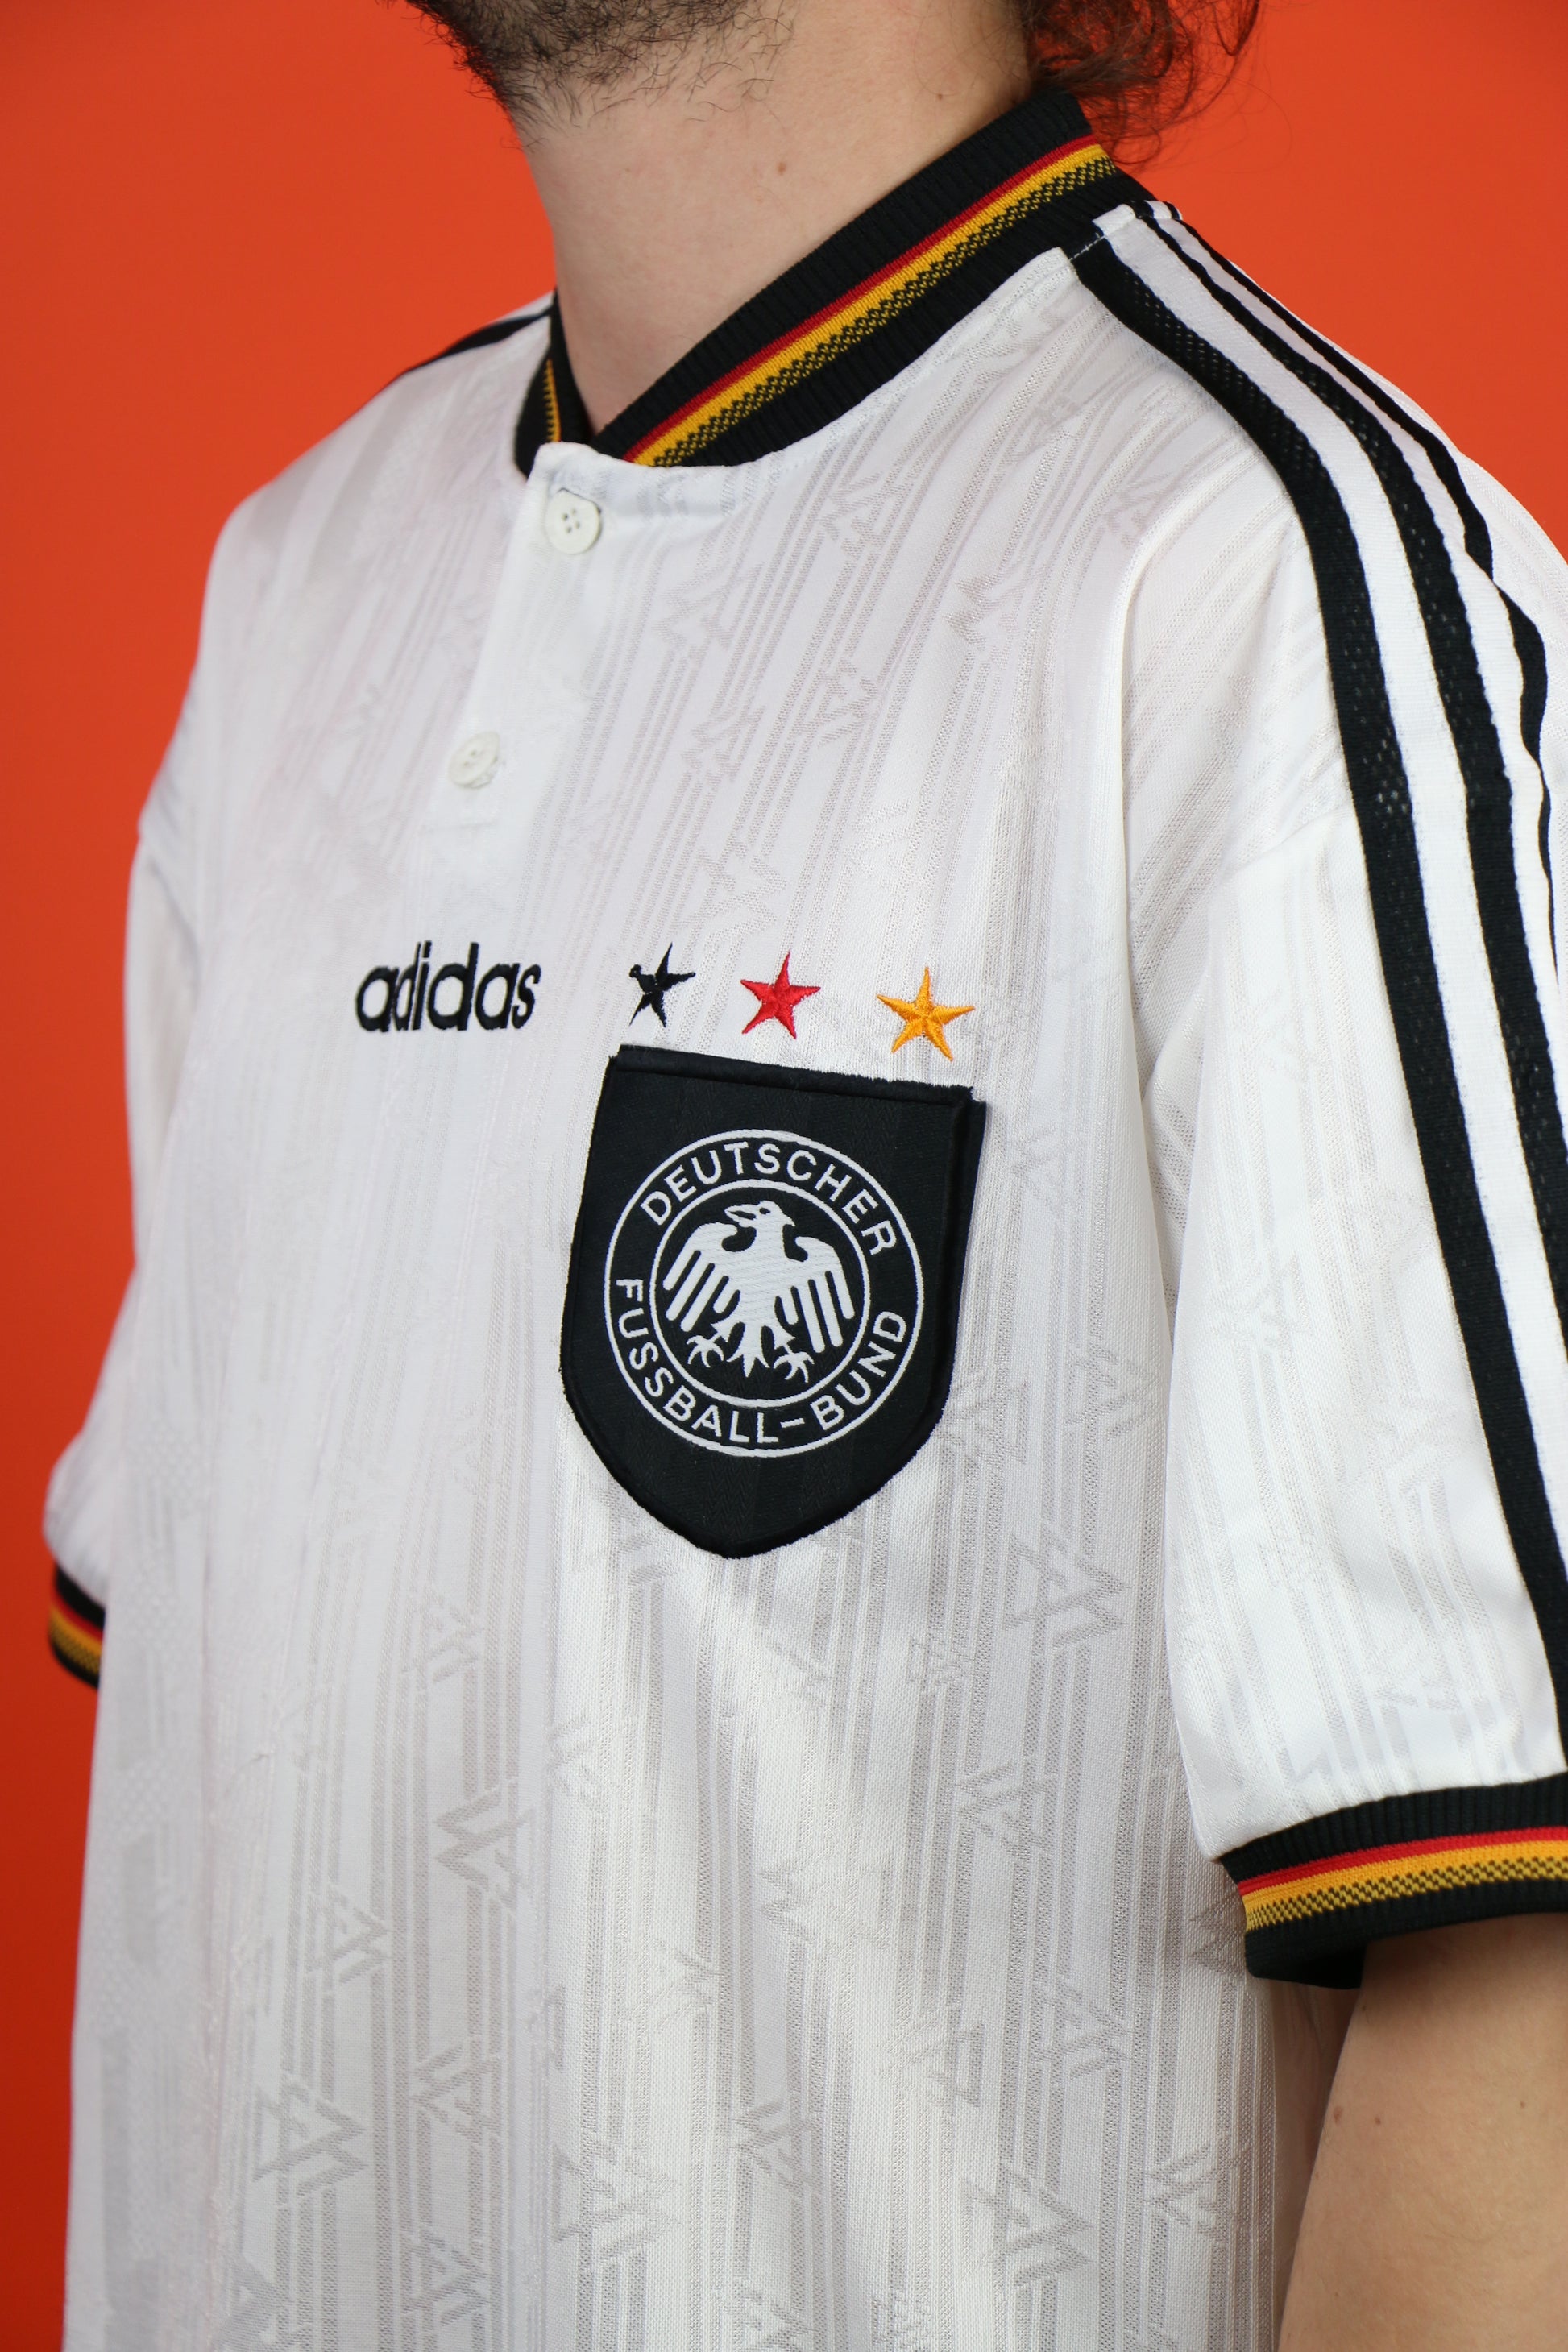 Adidas Germany Jersey 1996 - vintage clothing clochard92.com